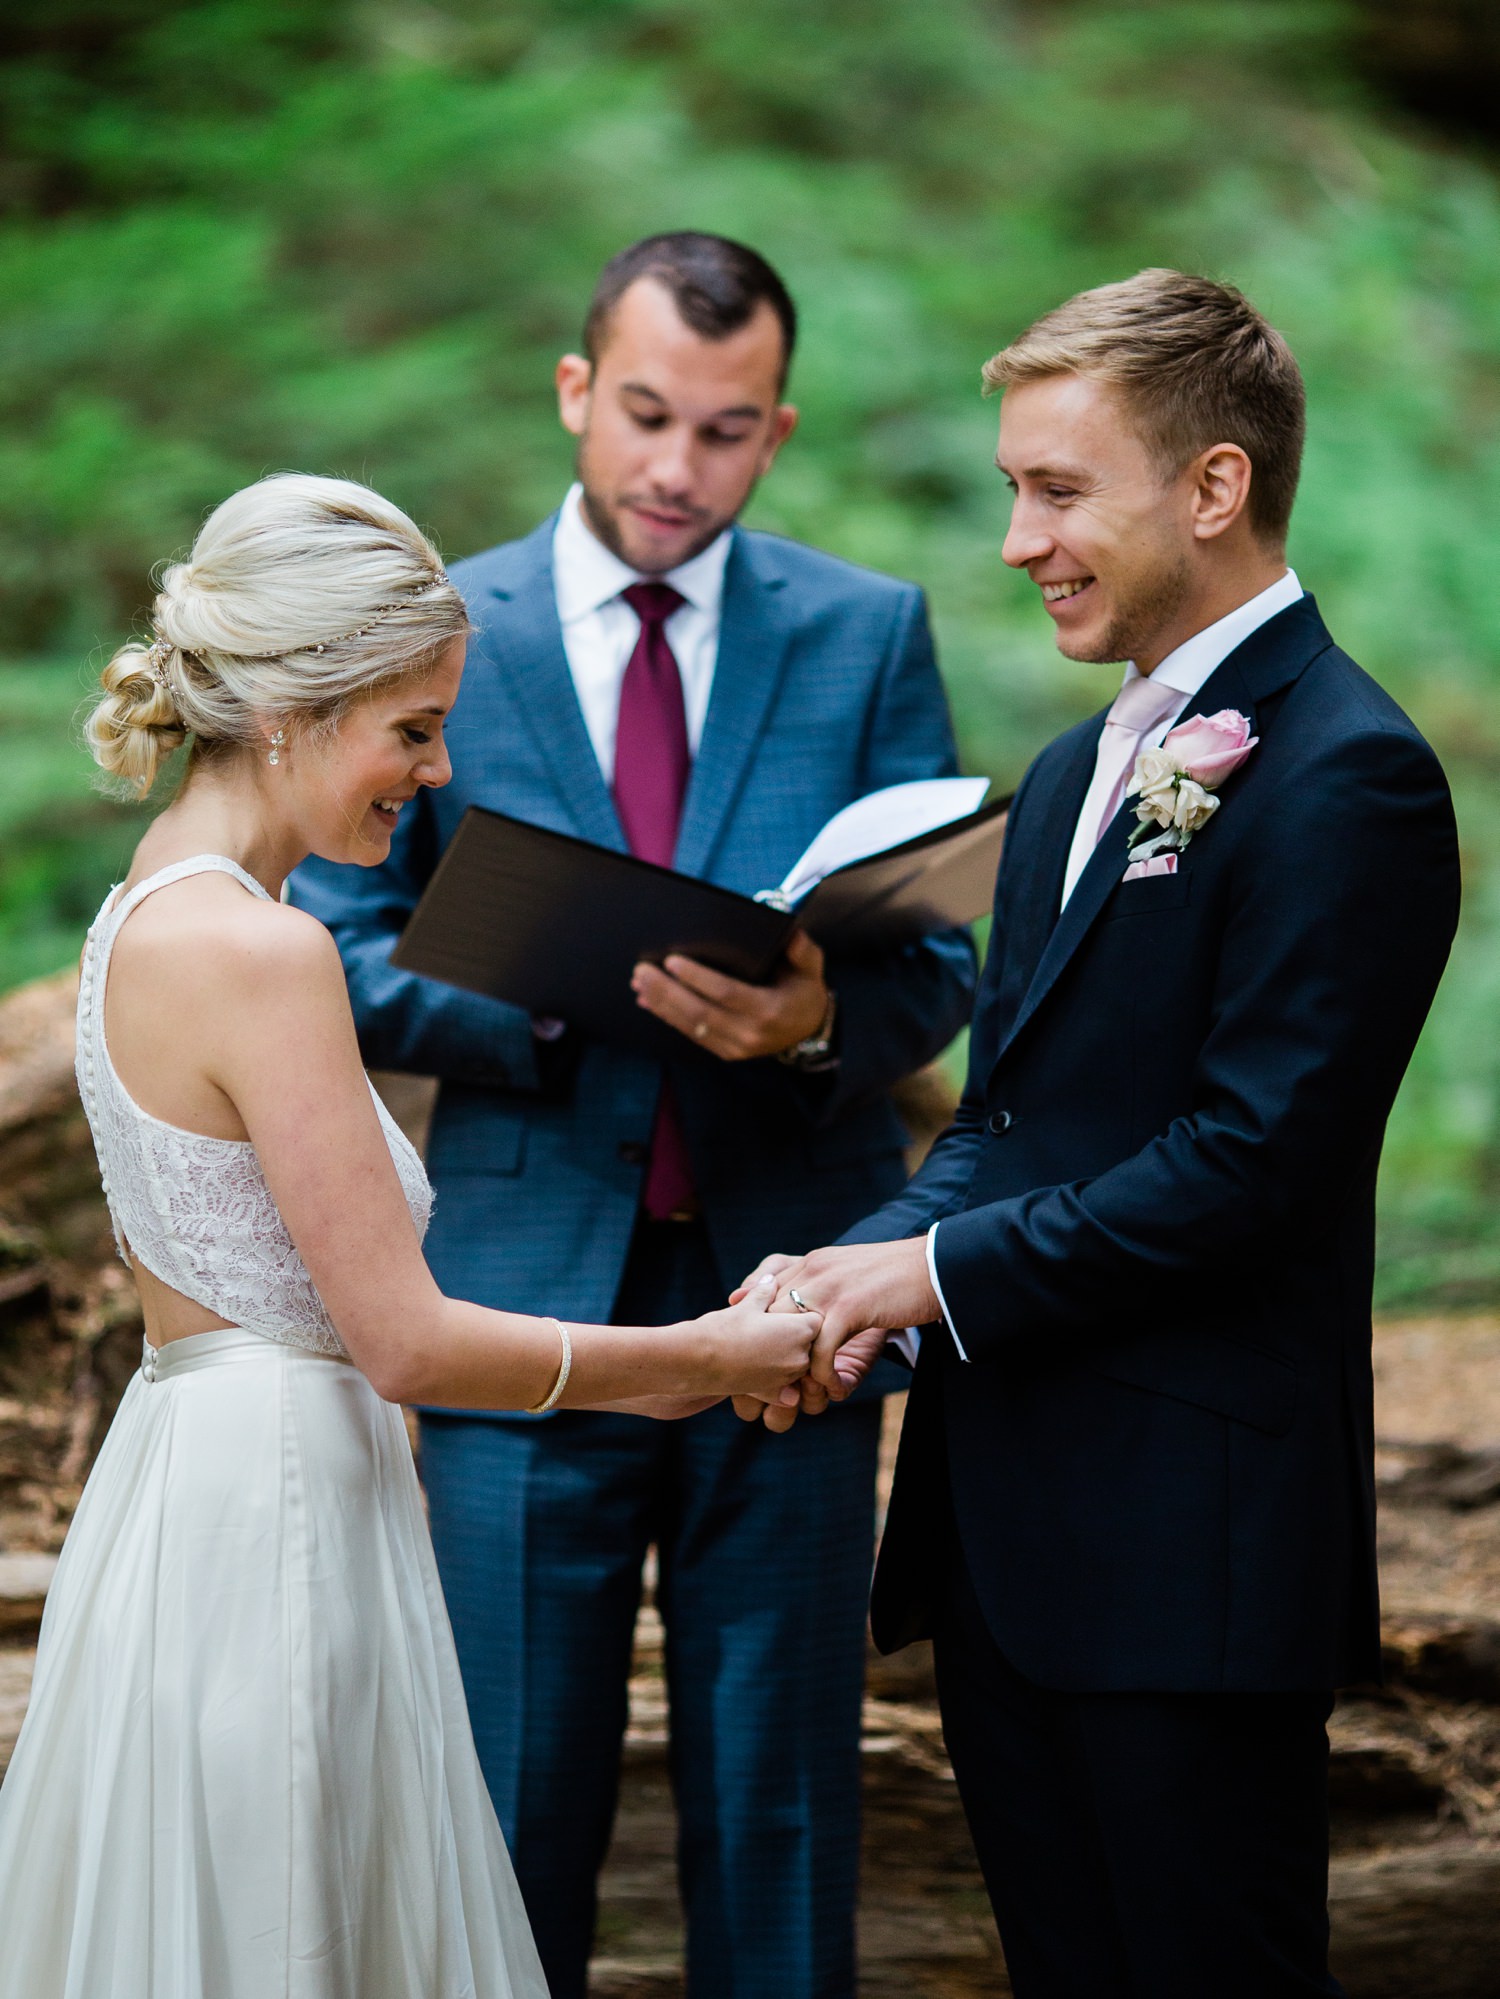 bride and groom exchange rings at national park wedding